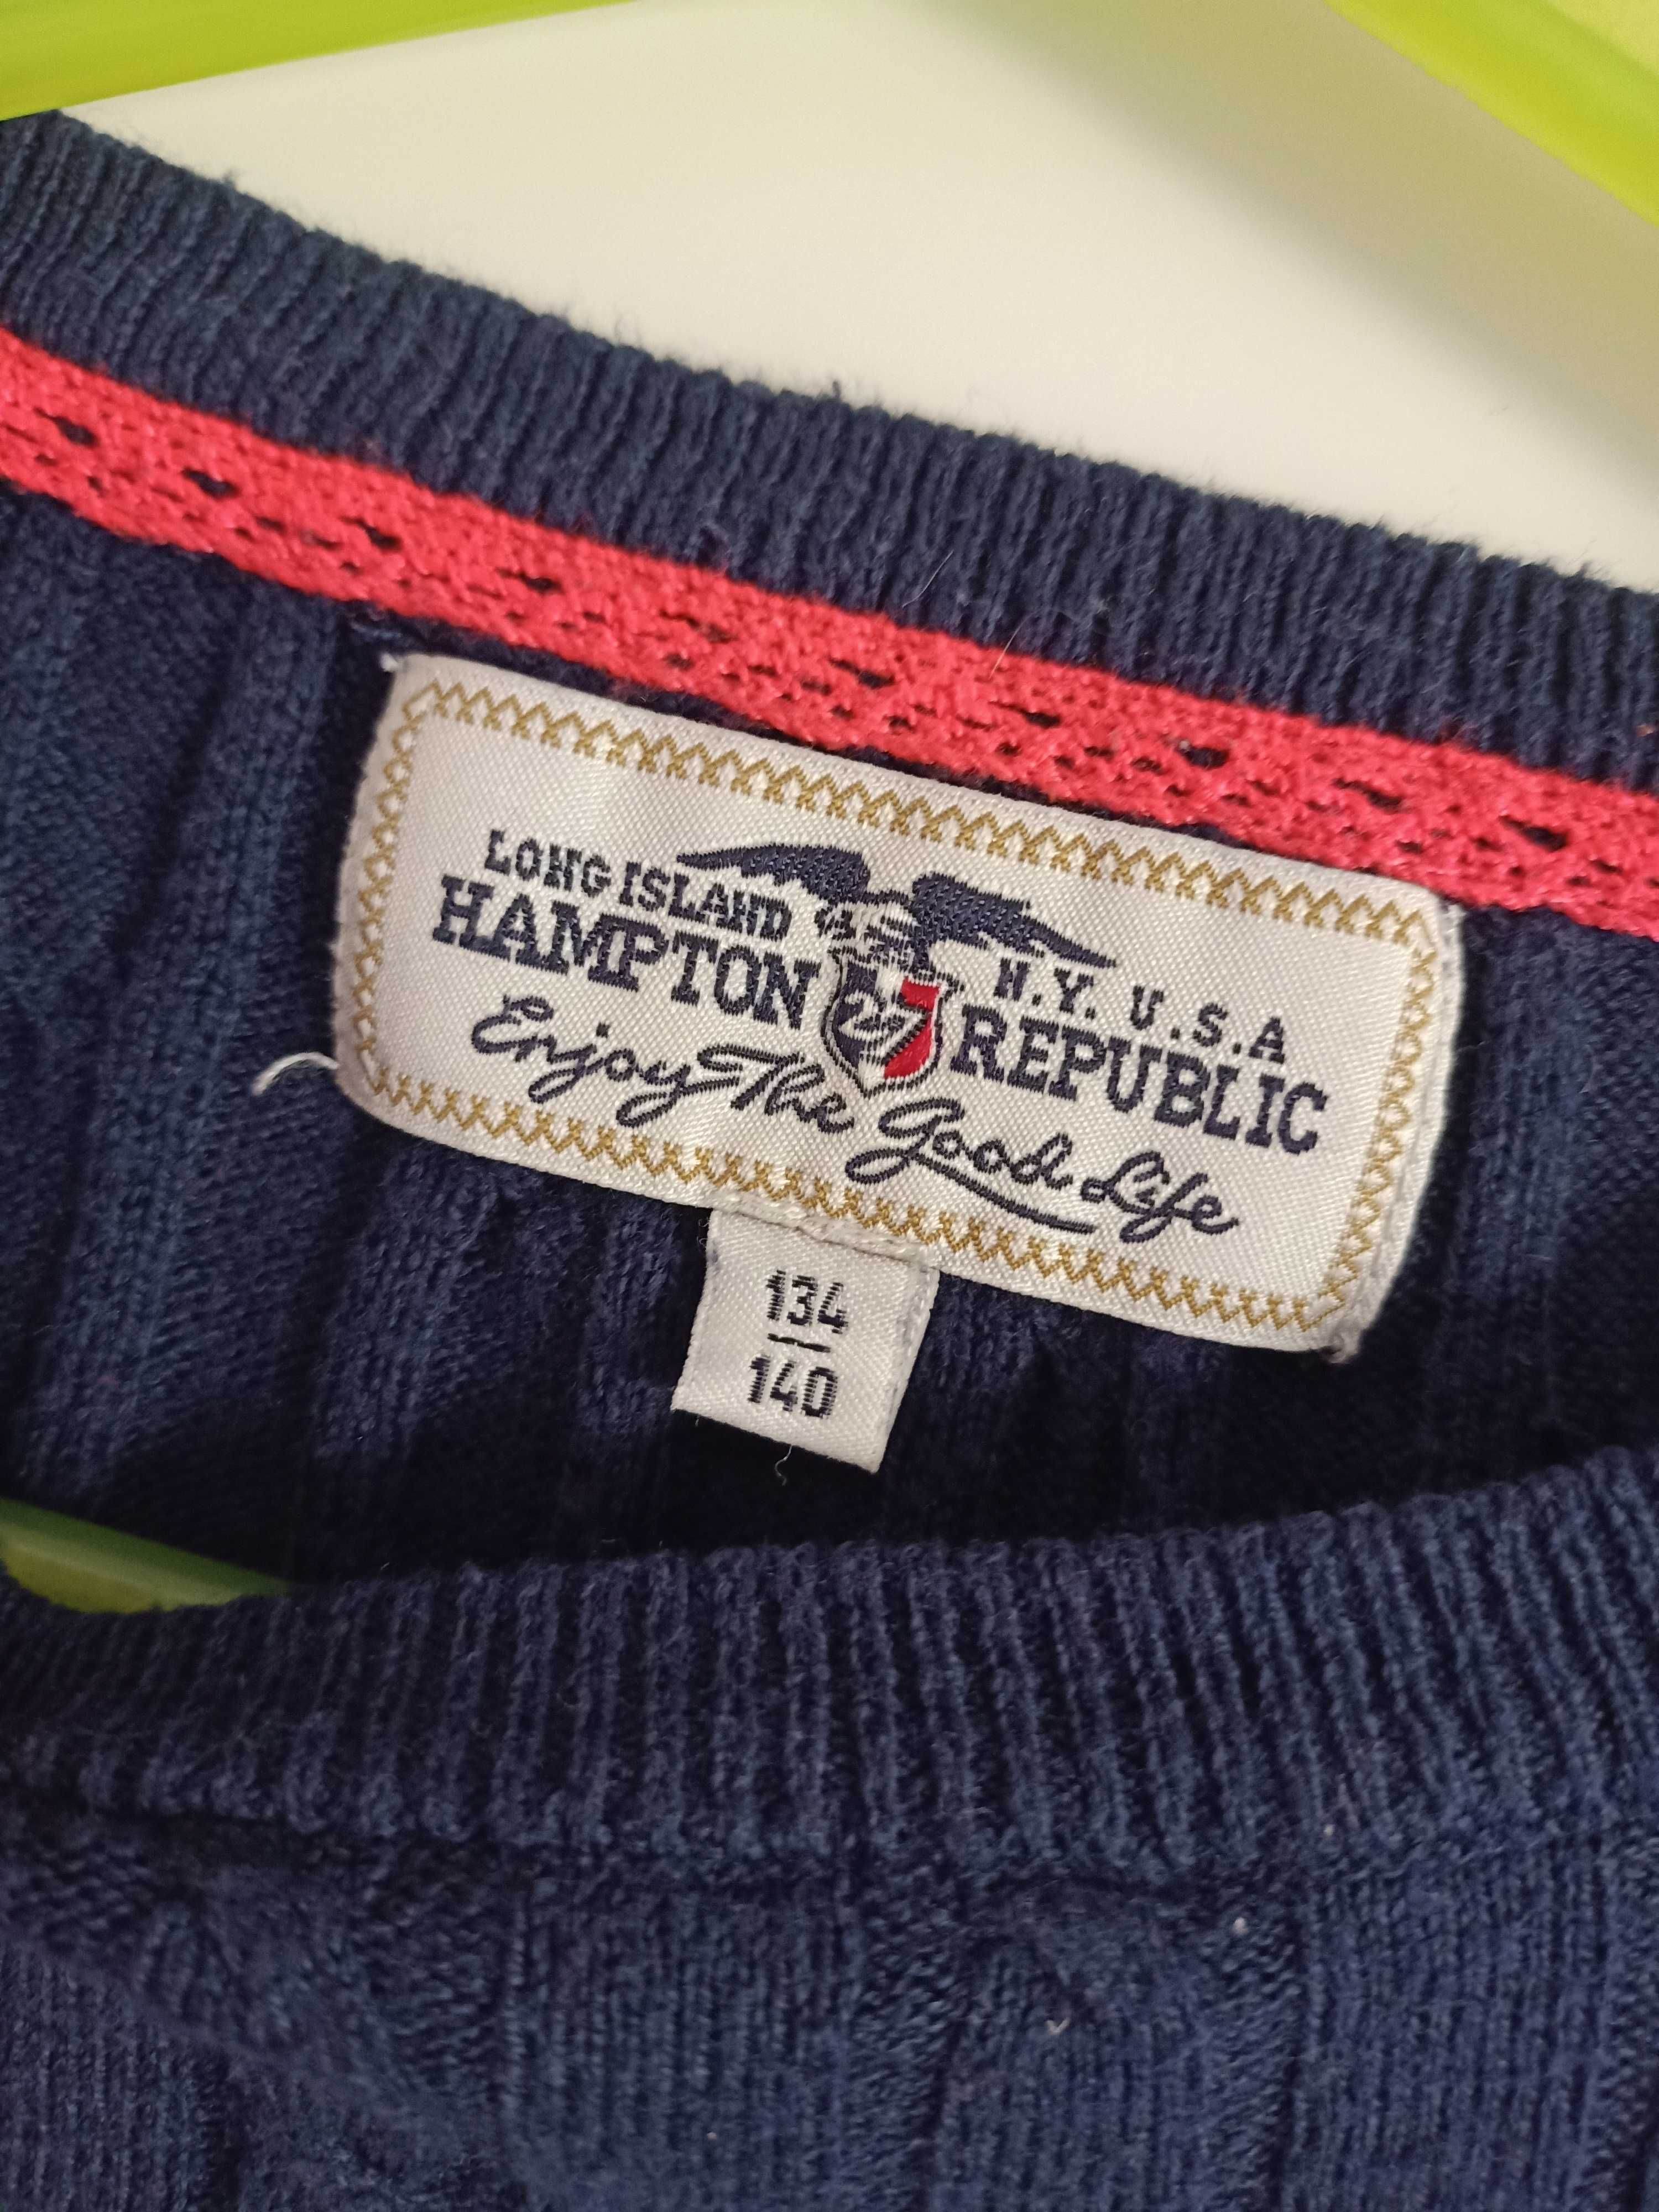 Hampton republic by KappAhl sweterek rozmiar 134/140 sweter bluzka